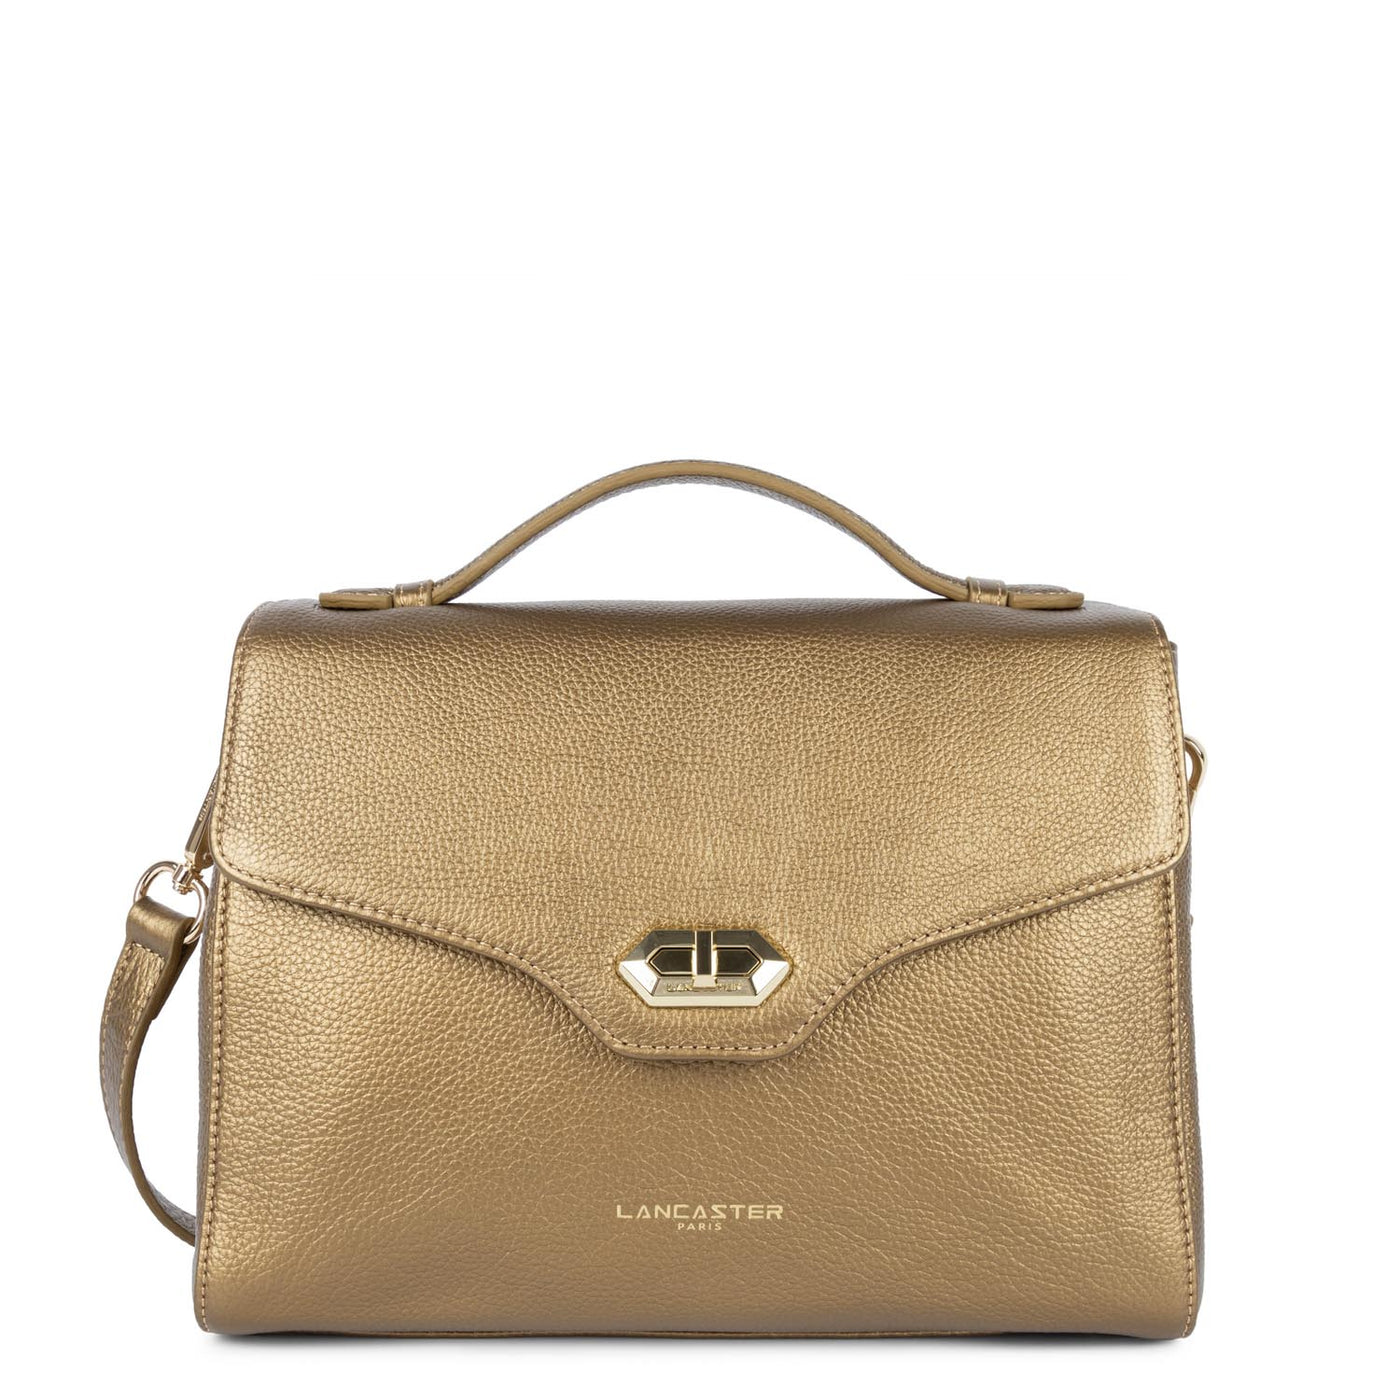 handbag - foulonné milano #couleur_gold-antic